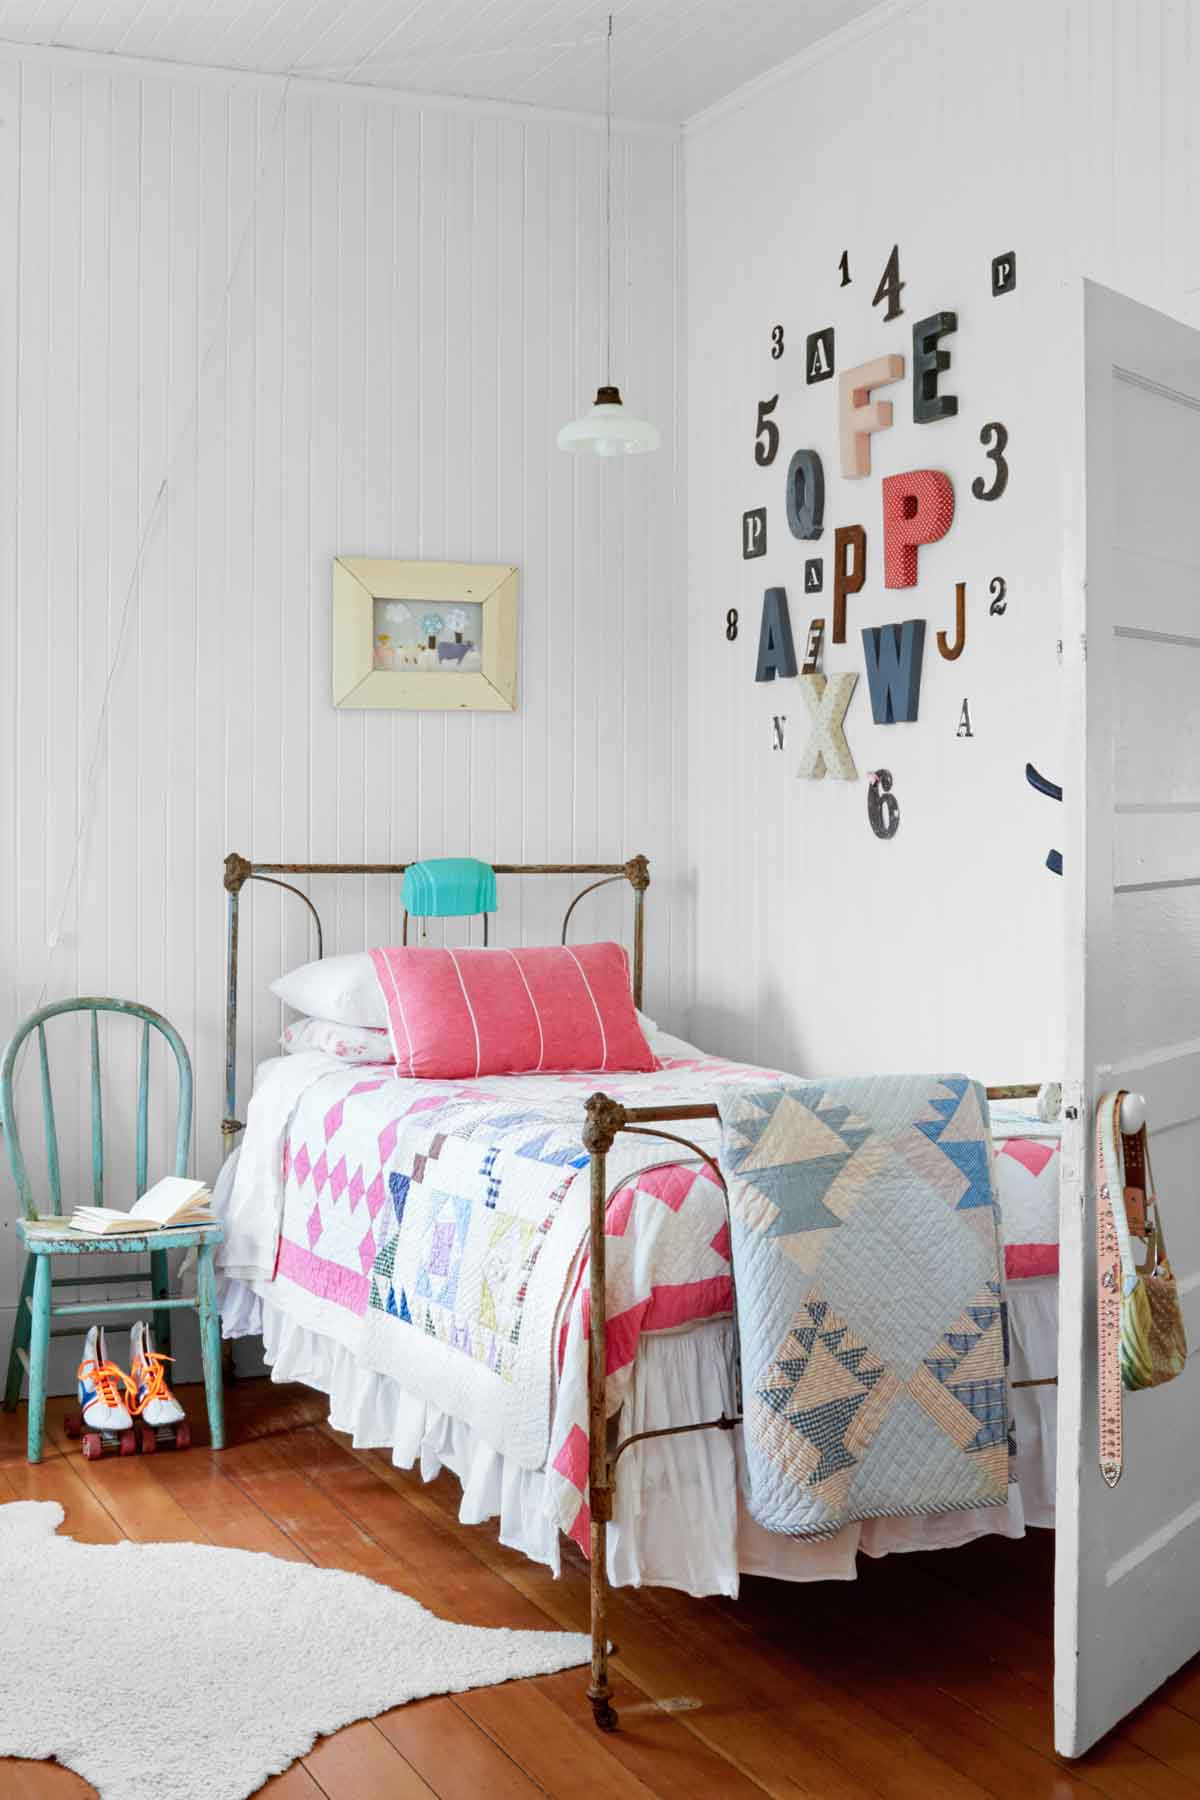 Cute Girl Bedroom Ideas
 12 Fun Girl s Bedroom Decor Ideas Cute Room Decorating